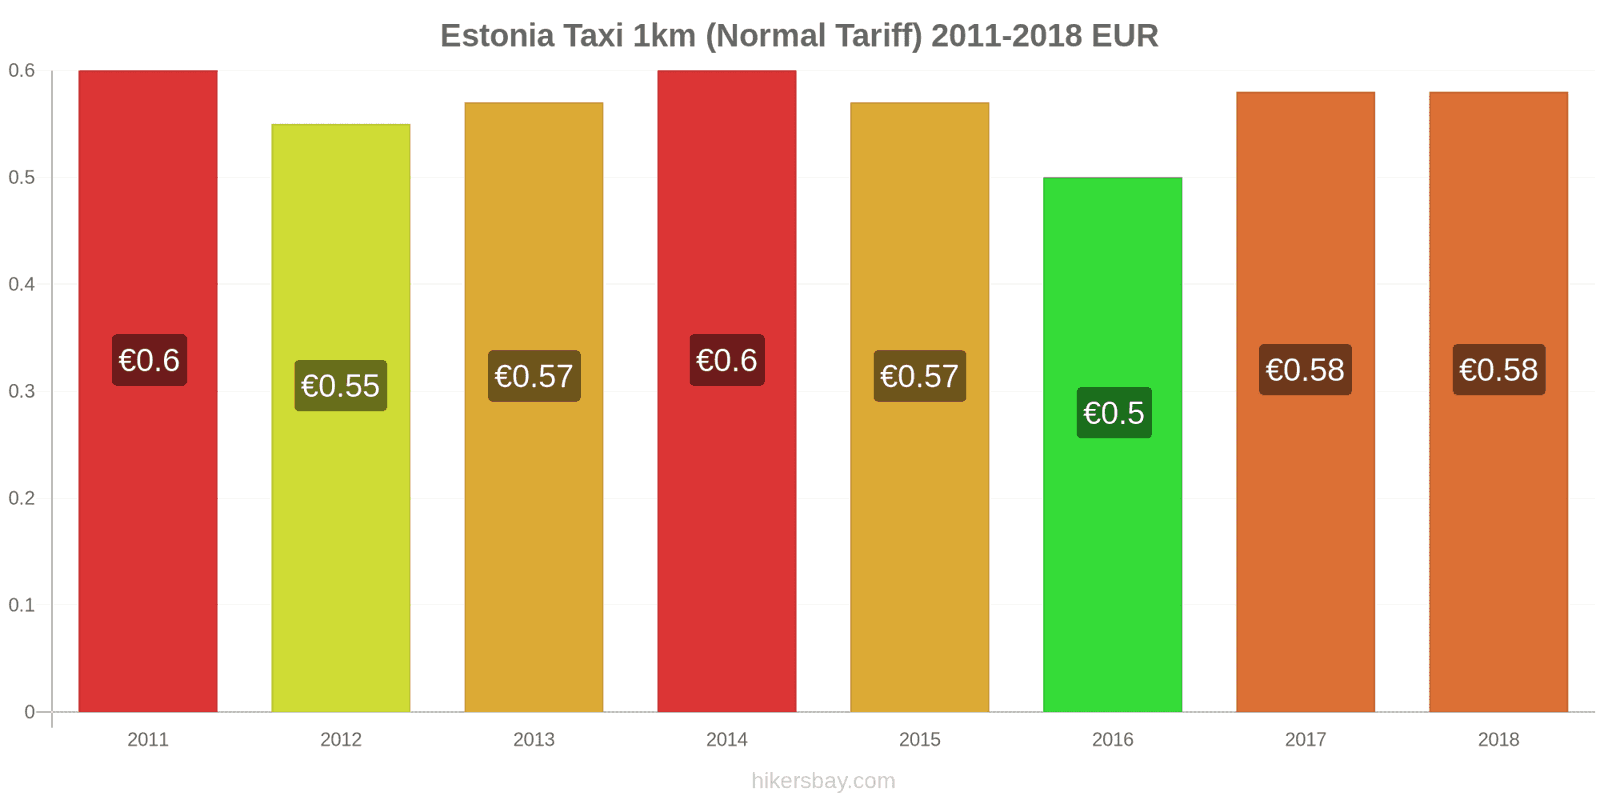 Estonia price changes Taxi 1km (Normal Tariff) hikersbay.com